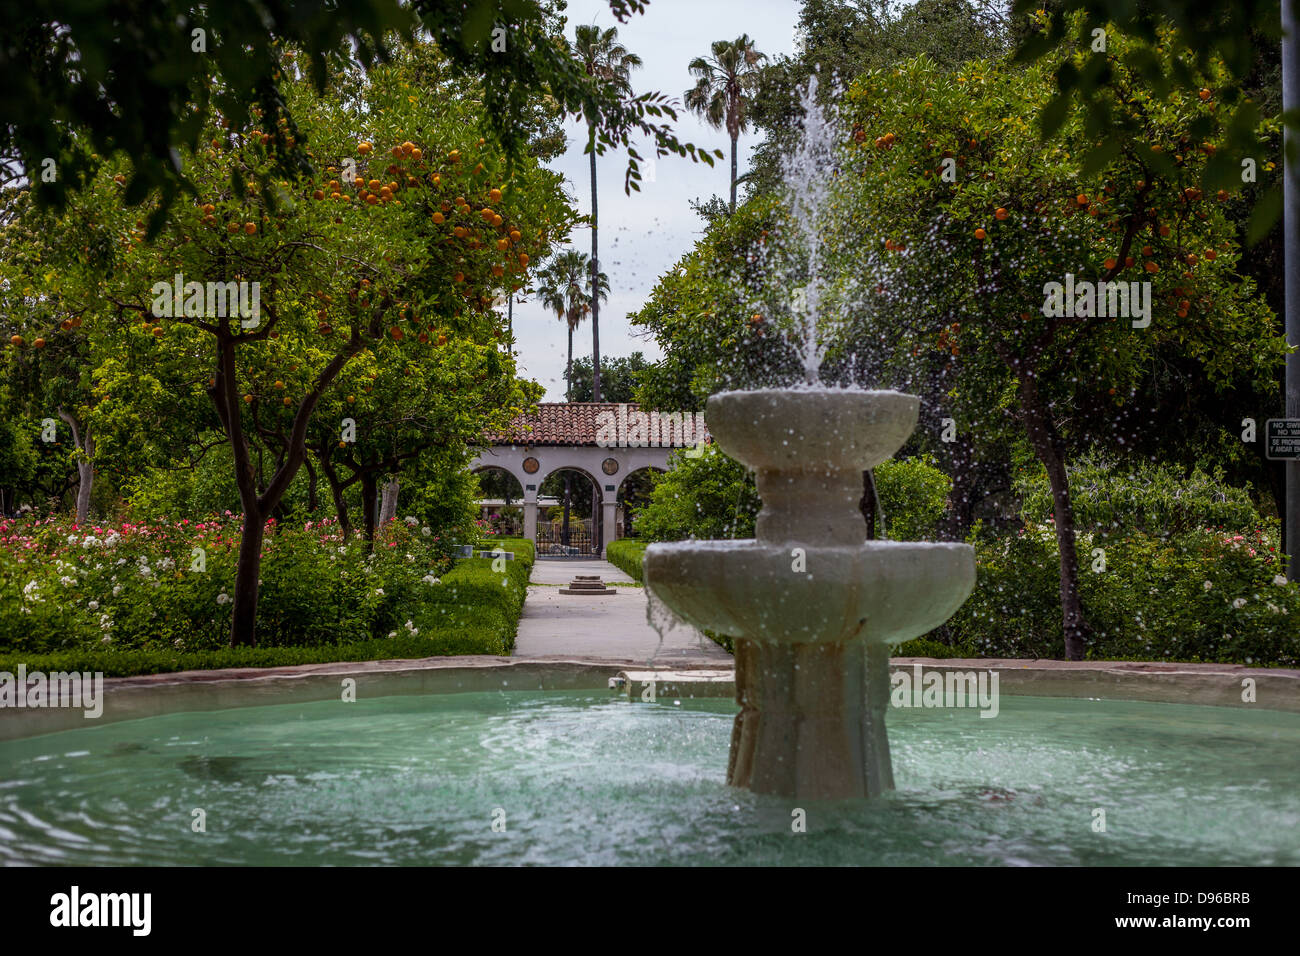 A Fountain In The Gardens At Mission San Fernando Rey De Espana In